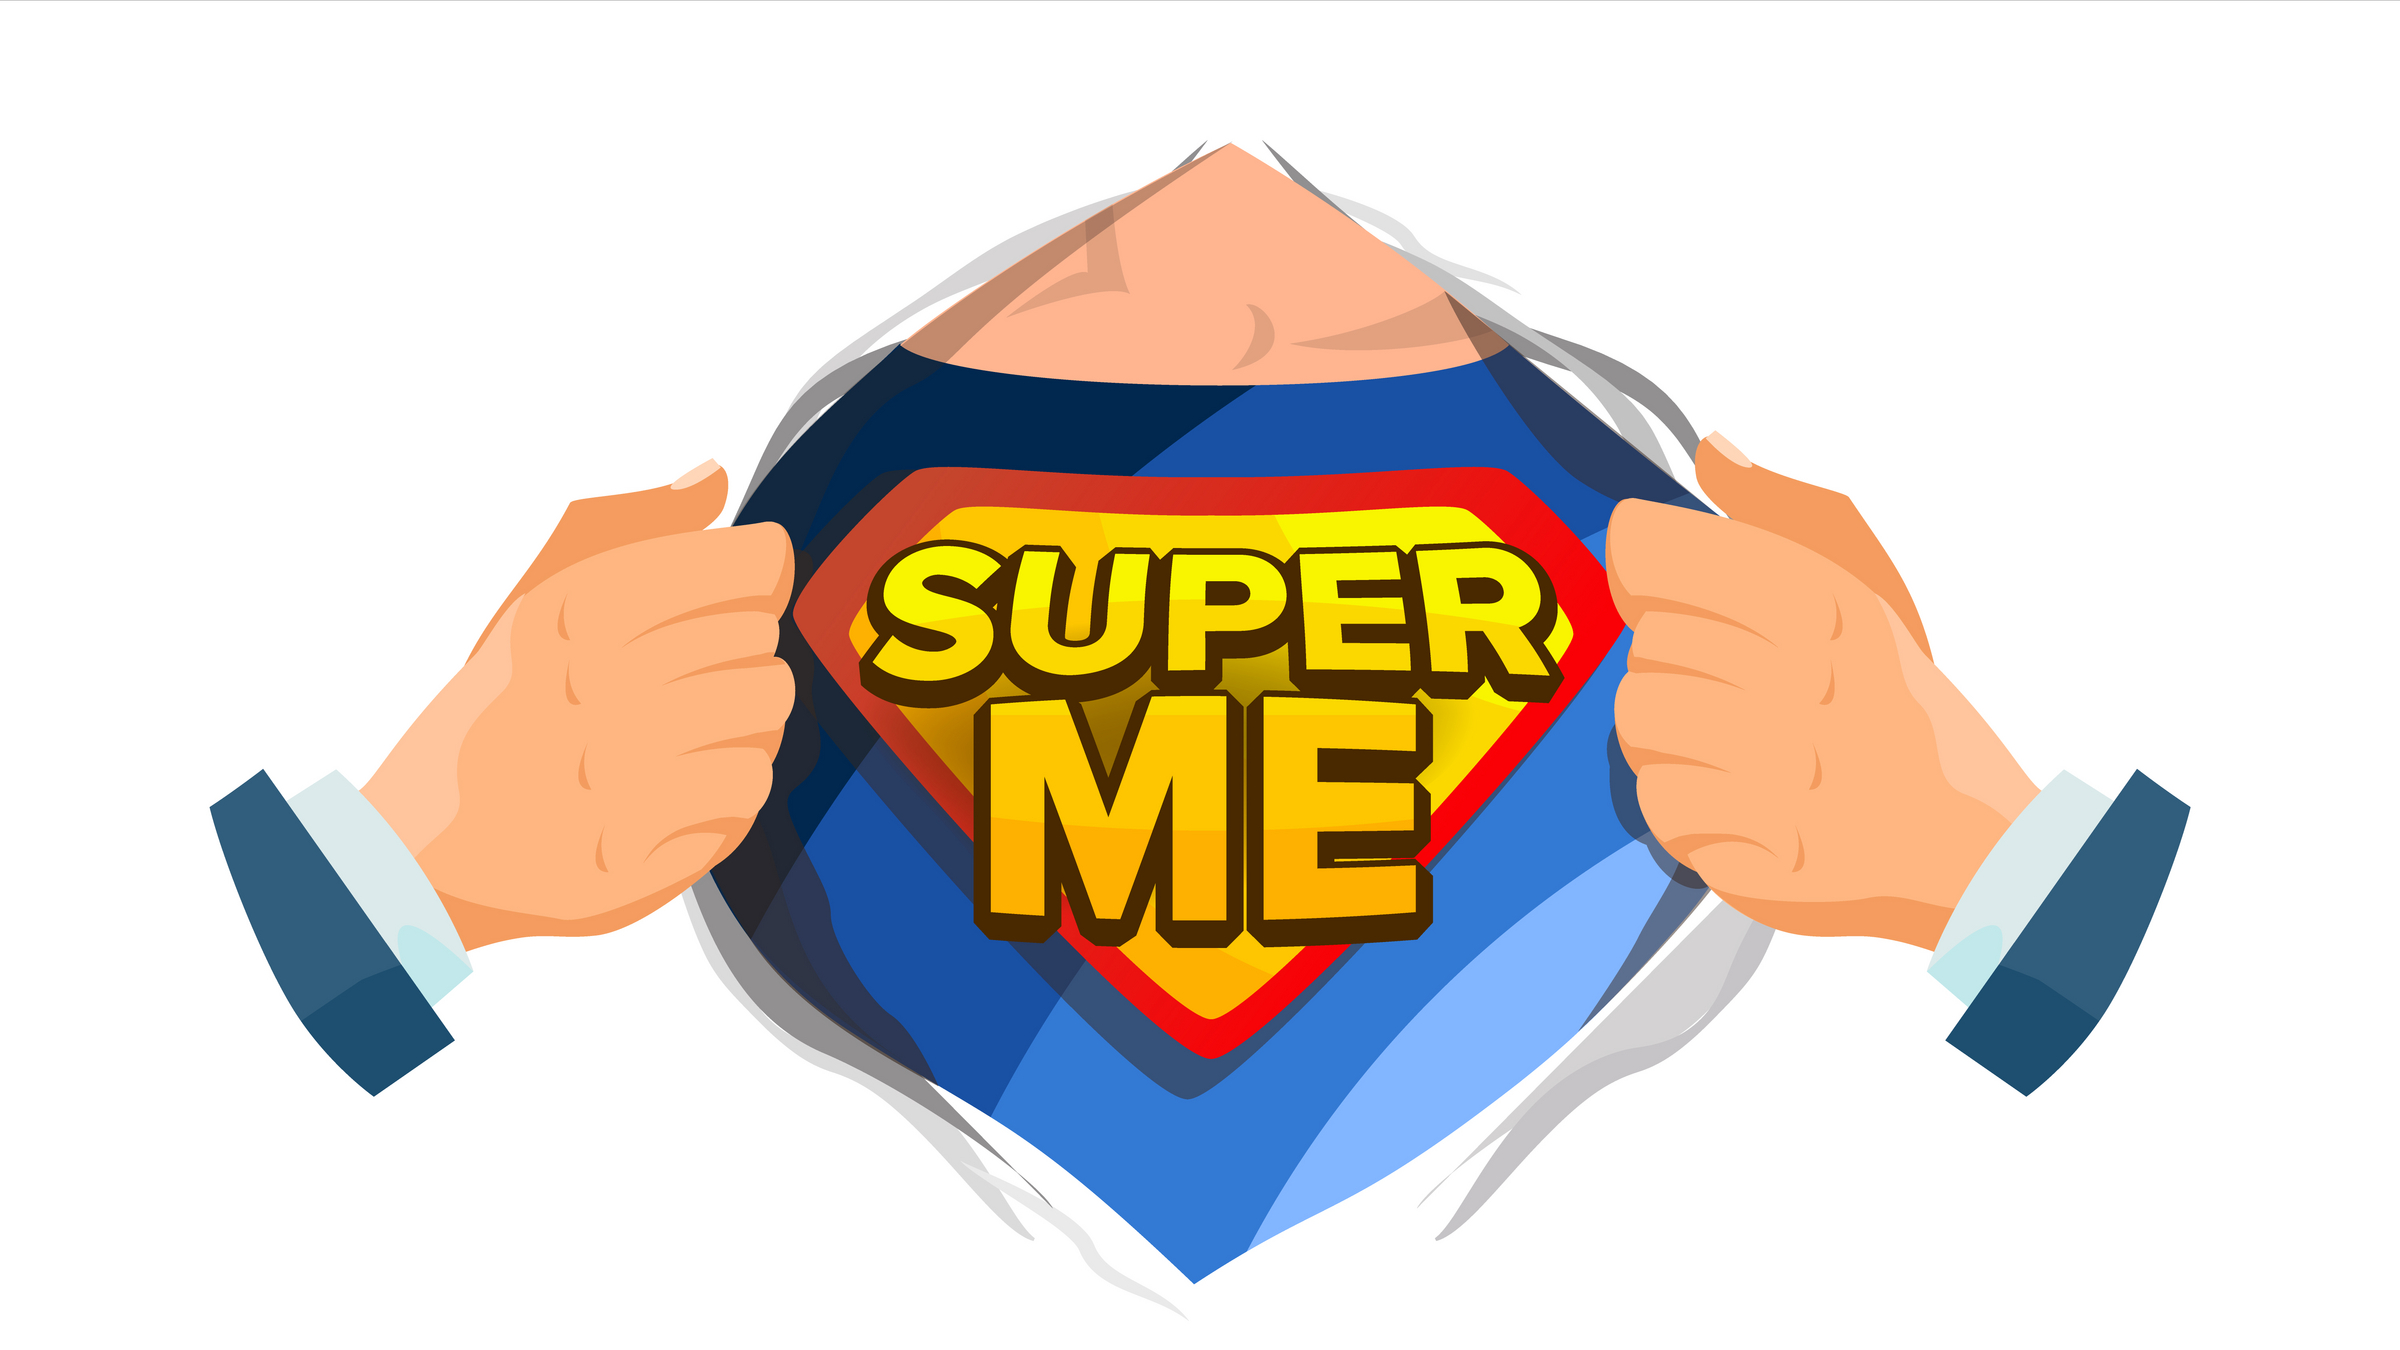 Superhero chest logo that says "Super Me"